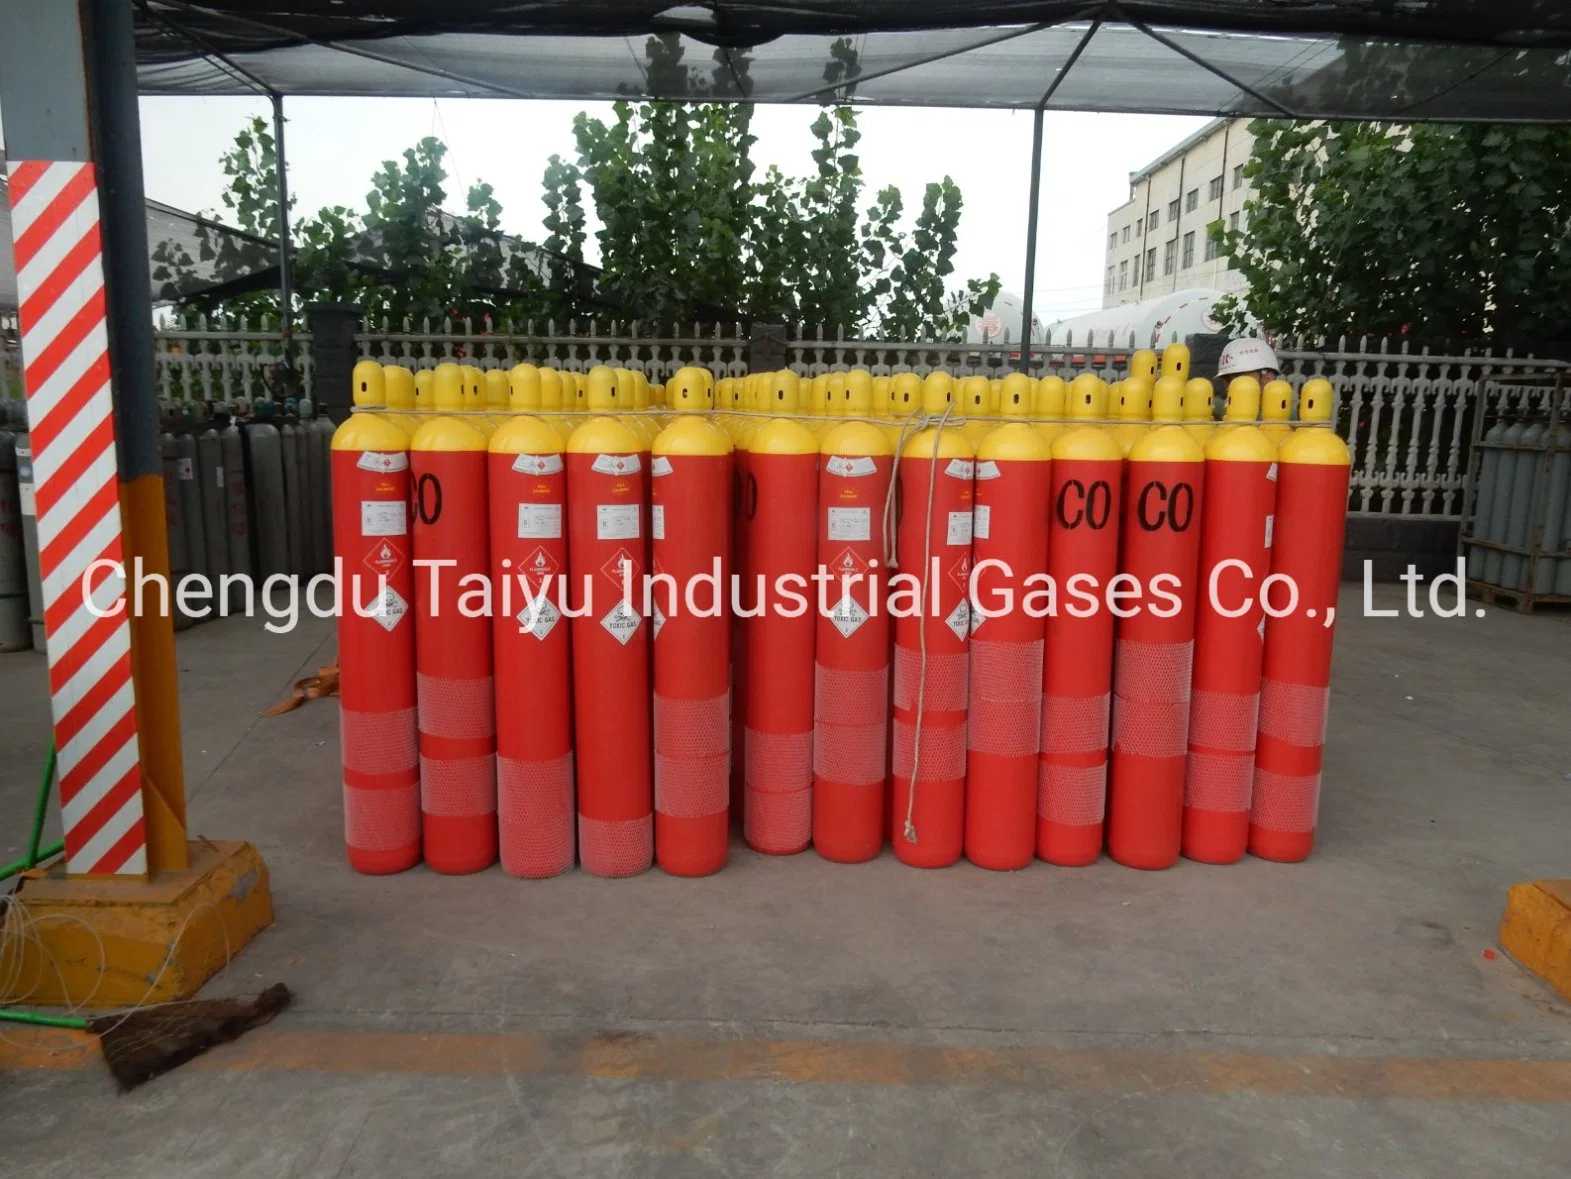 Factory Supplied China Good Quality Sf6 Gas / So2 Sulfur Dioxide / CH4 Methane / H2s Gas / HCl Gas / C2h4 Ethylene Gas / Nh3 Ammonia / C4h10 Butane / Co Gas